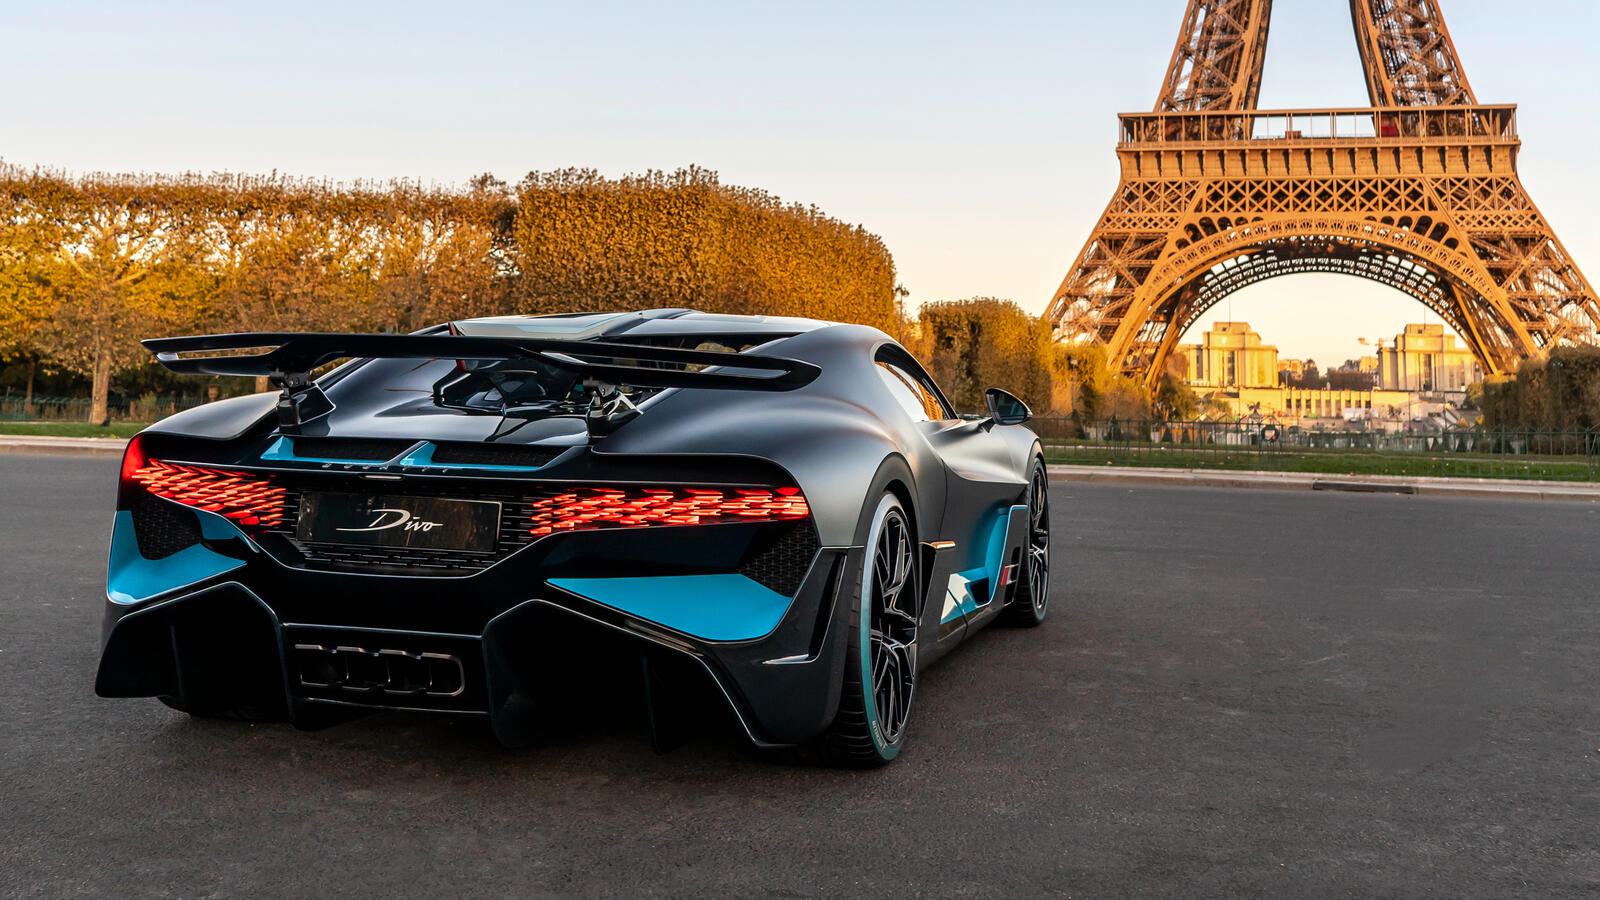 Бесплатное фото Bugatti Divo на фоне эйфелевой башни